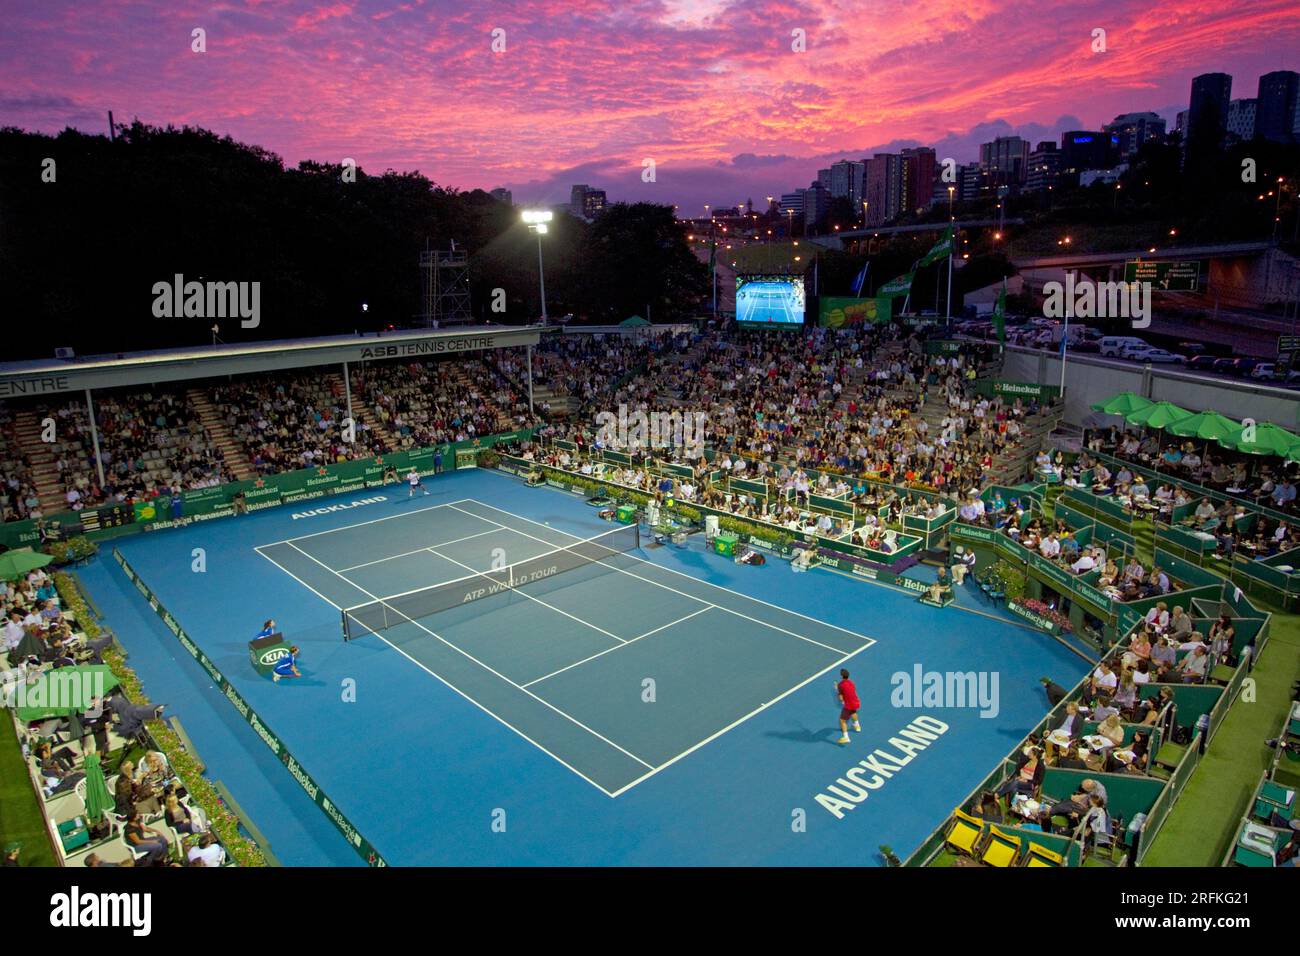 An overview of the ASB Tennis Centre in Auckland as Argentina's Carlos Berlocq, left, plays Spain's Fernando Verdasco at the Heineken Open Men's Tenni Stock Photo